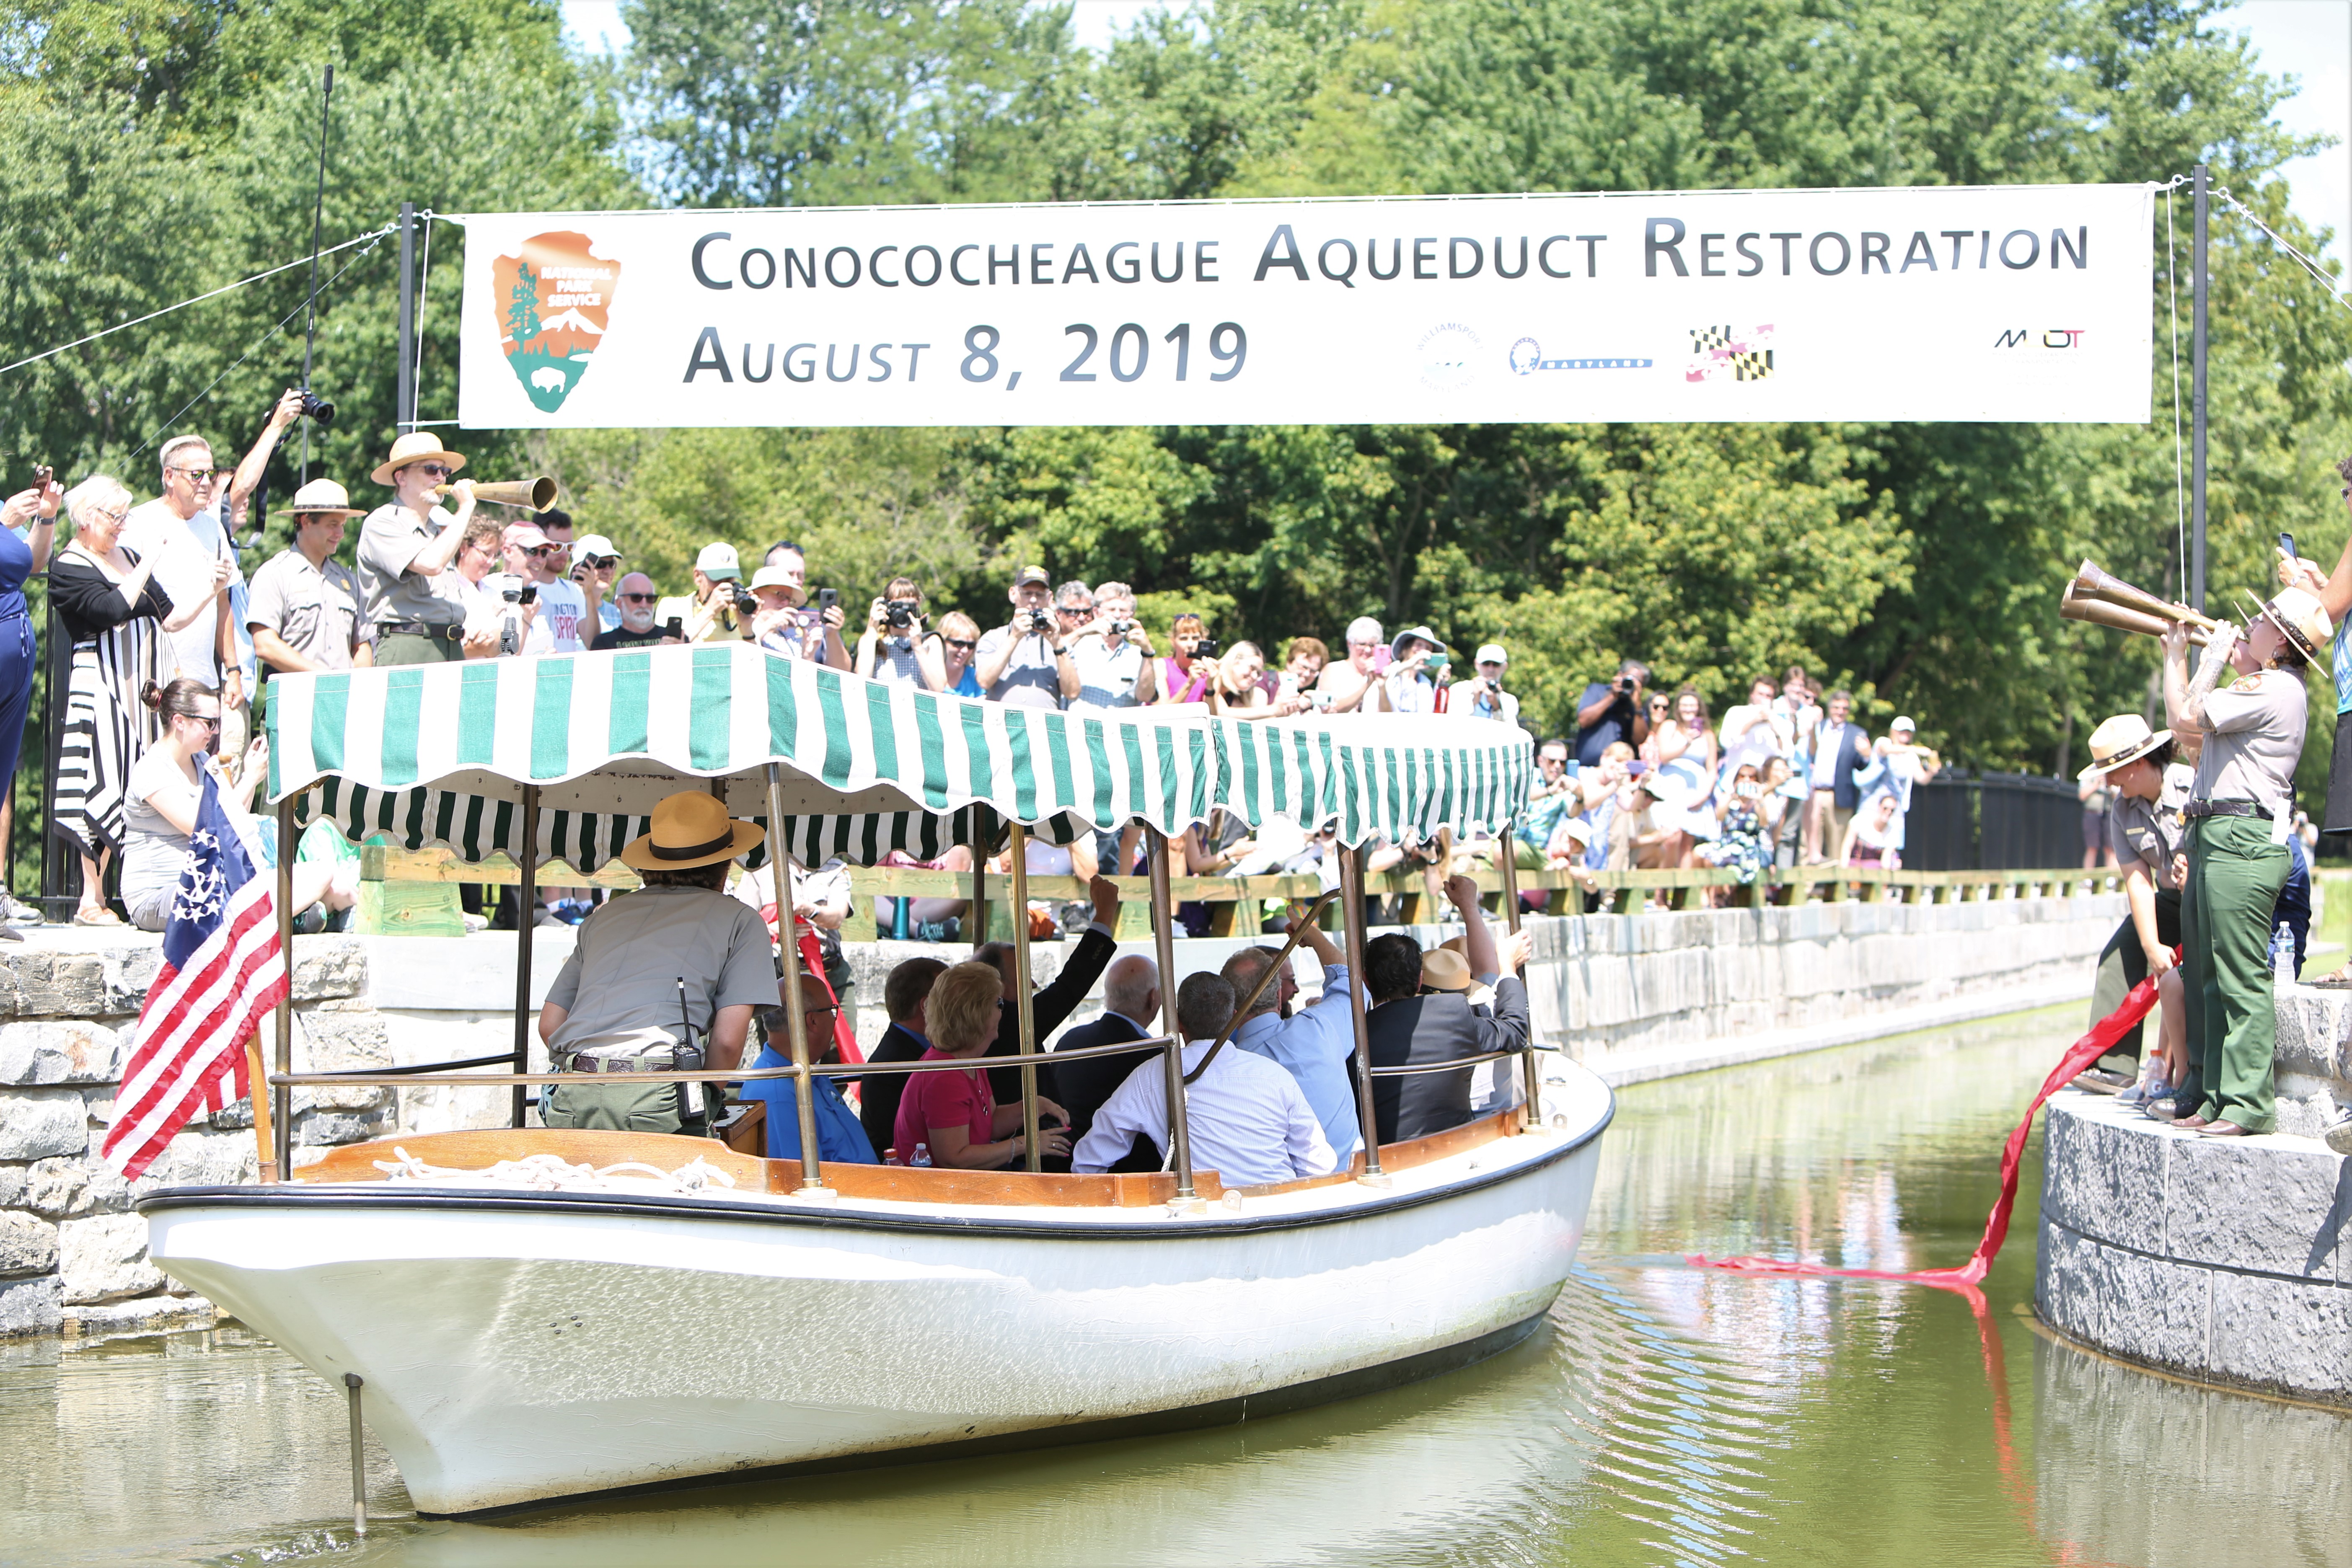 Canal boat enters aqueduct